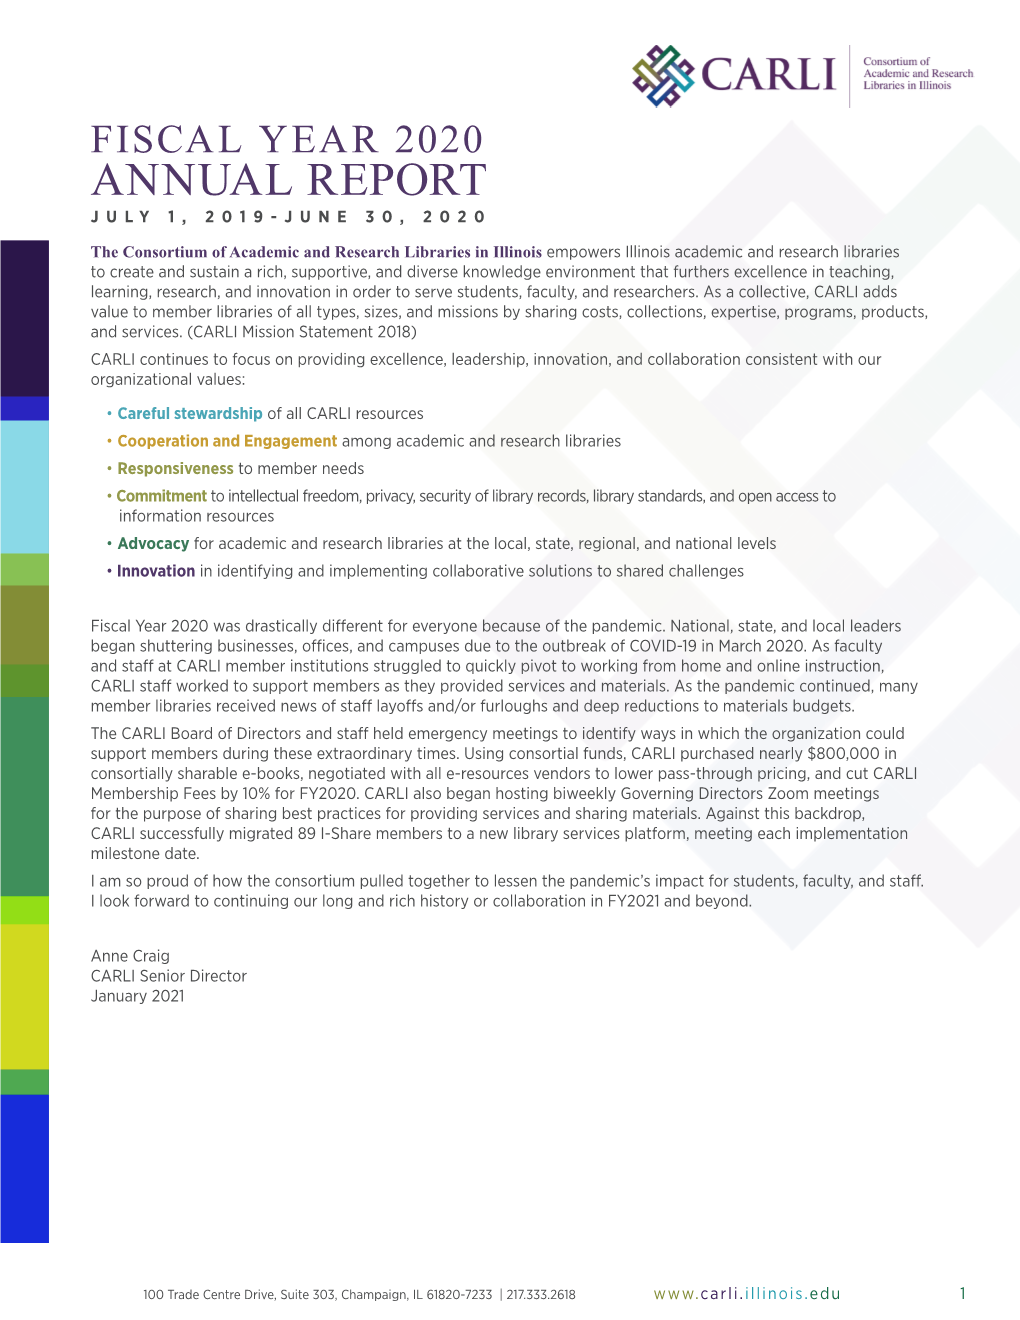 Annual Report July 1, 2019-June 30, 2020